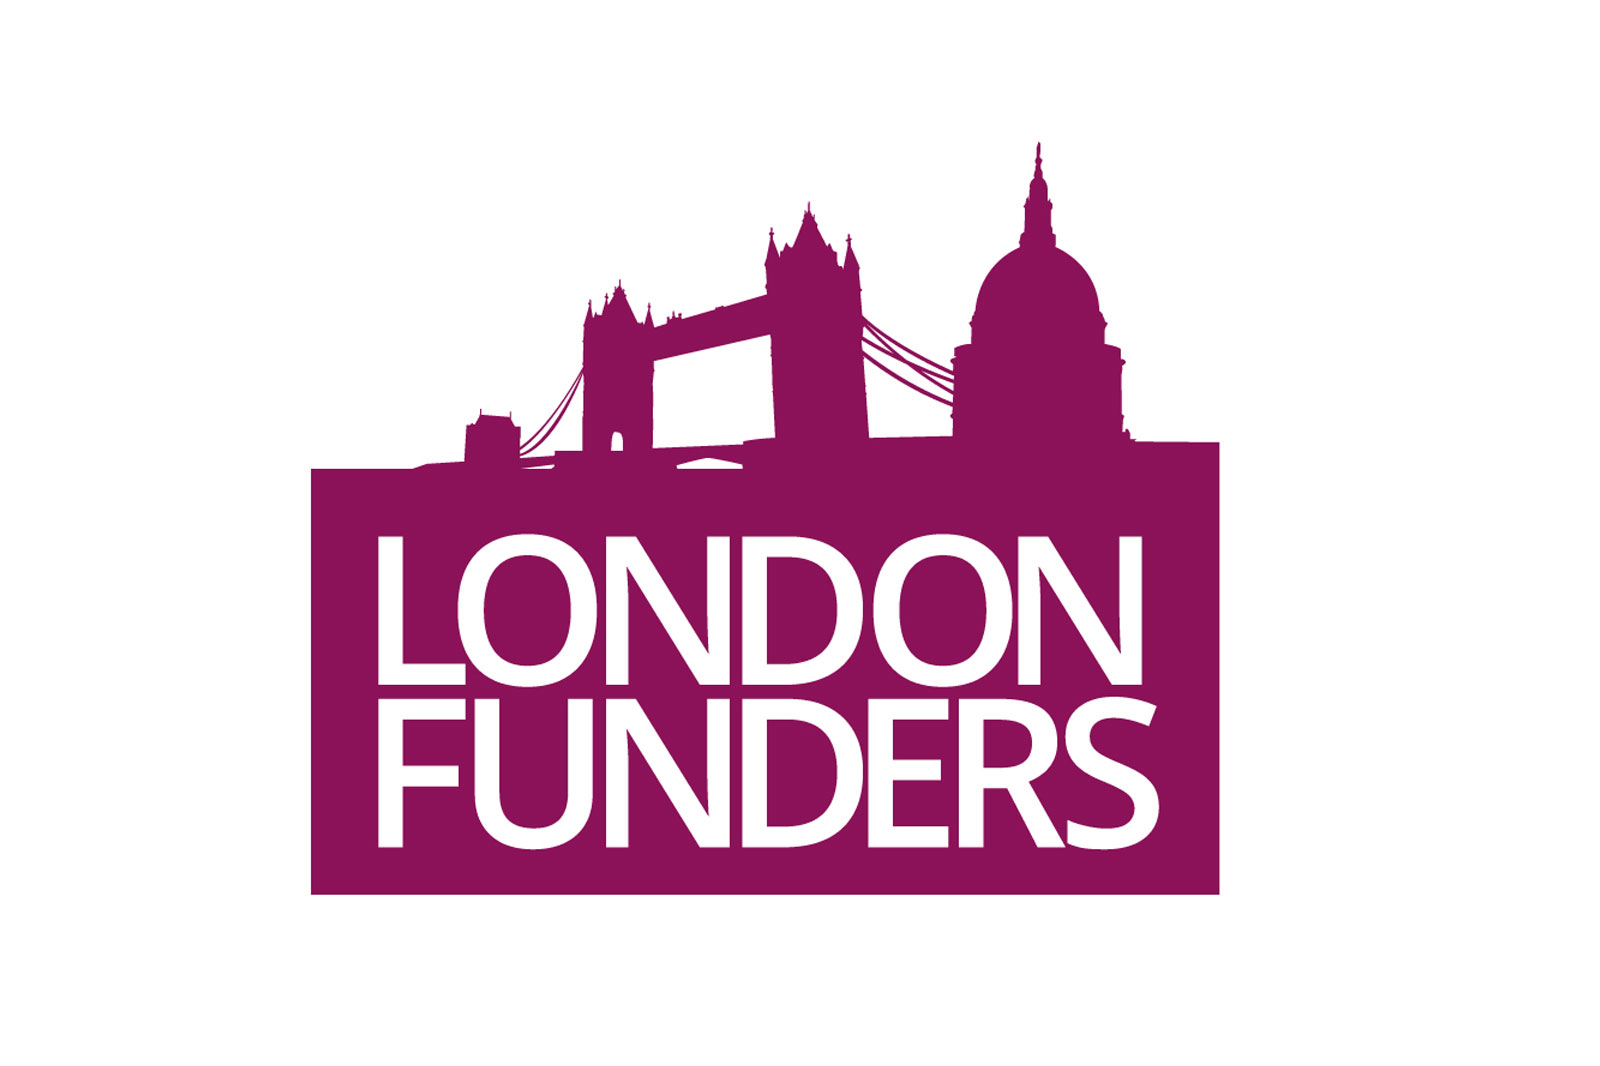 London Funders logo